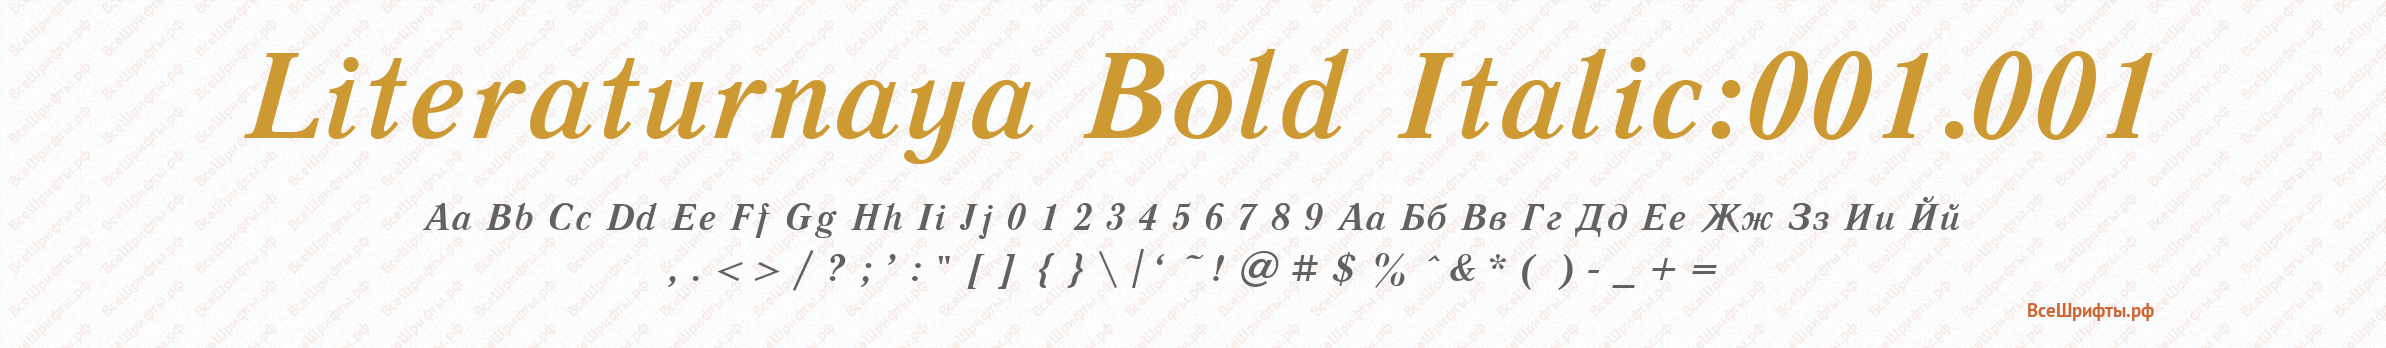 Шрифт Literaturnaya Bold Italic:001.001